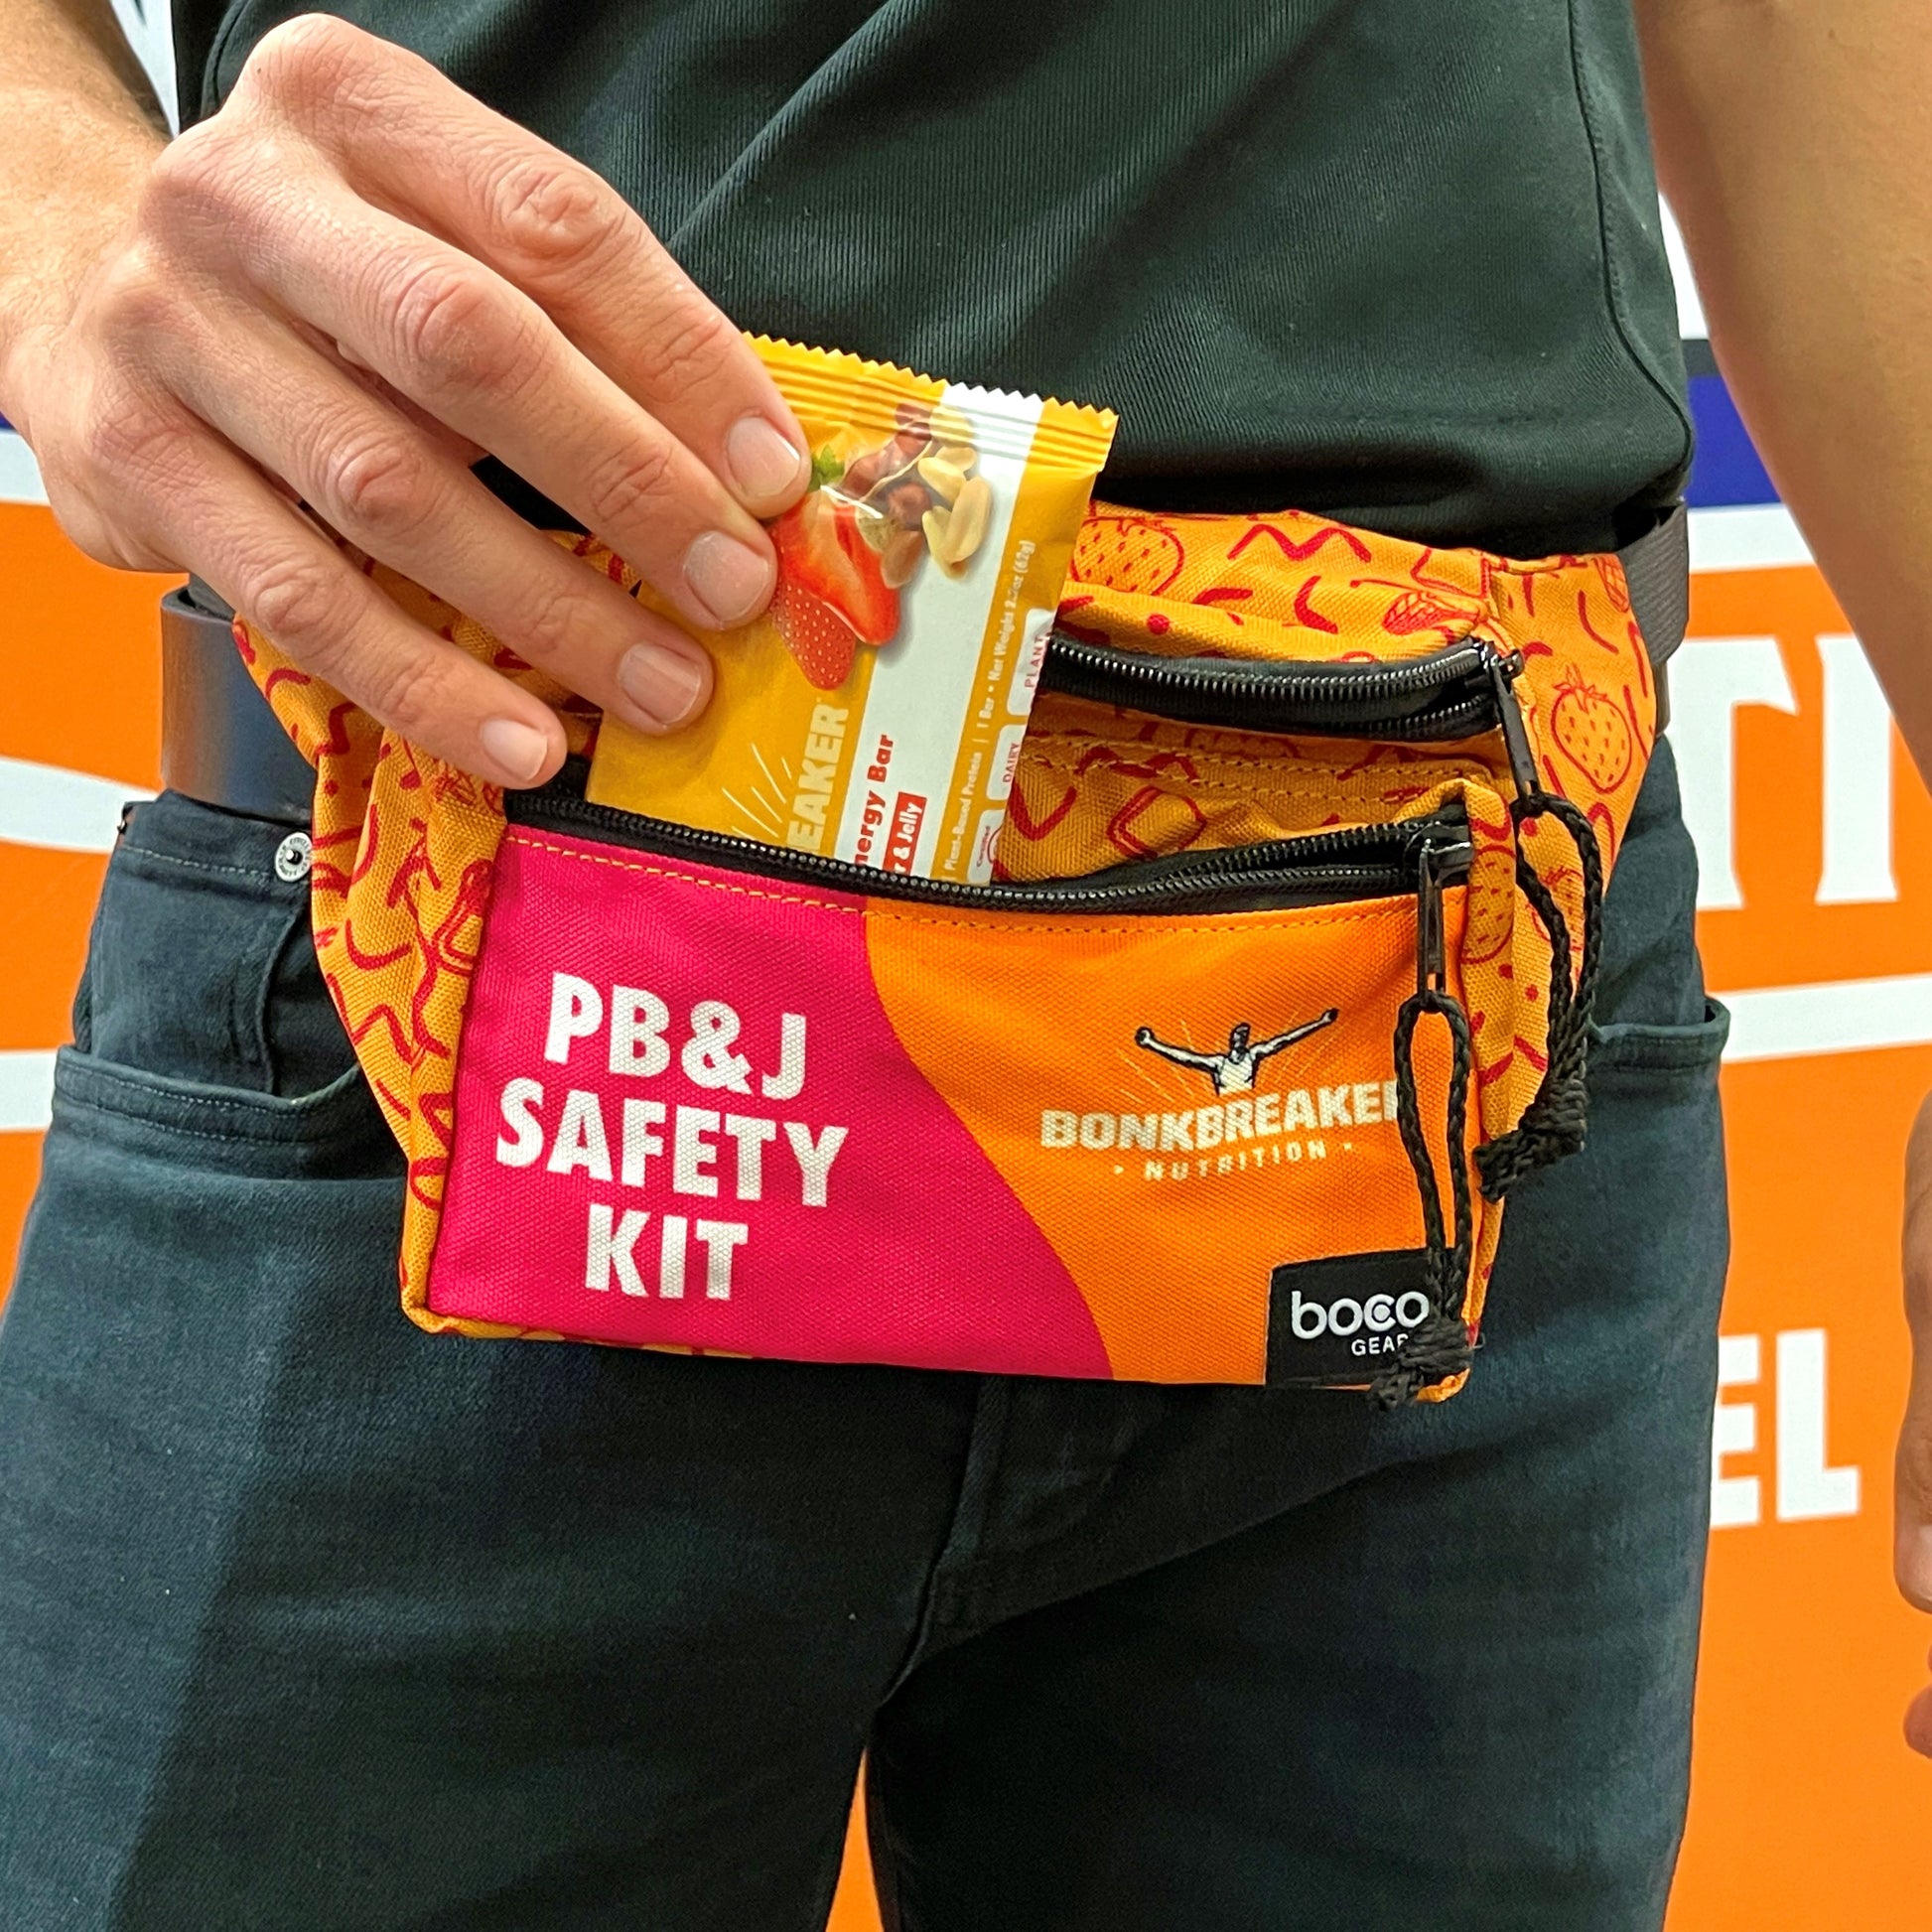 Orange Bonk Breaker "PB&J Safety Kit" Fanny Pack